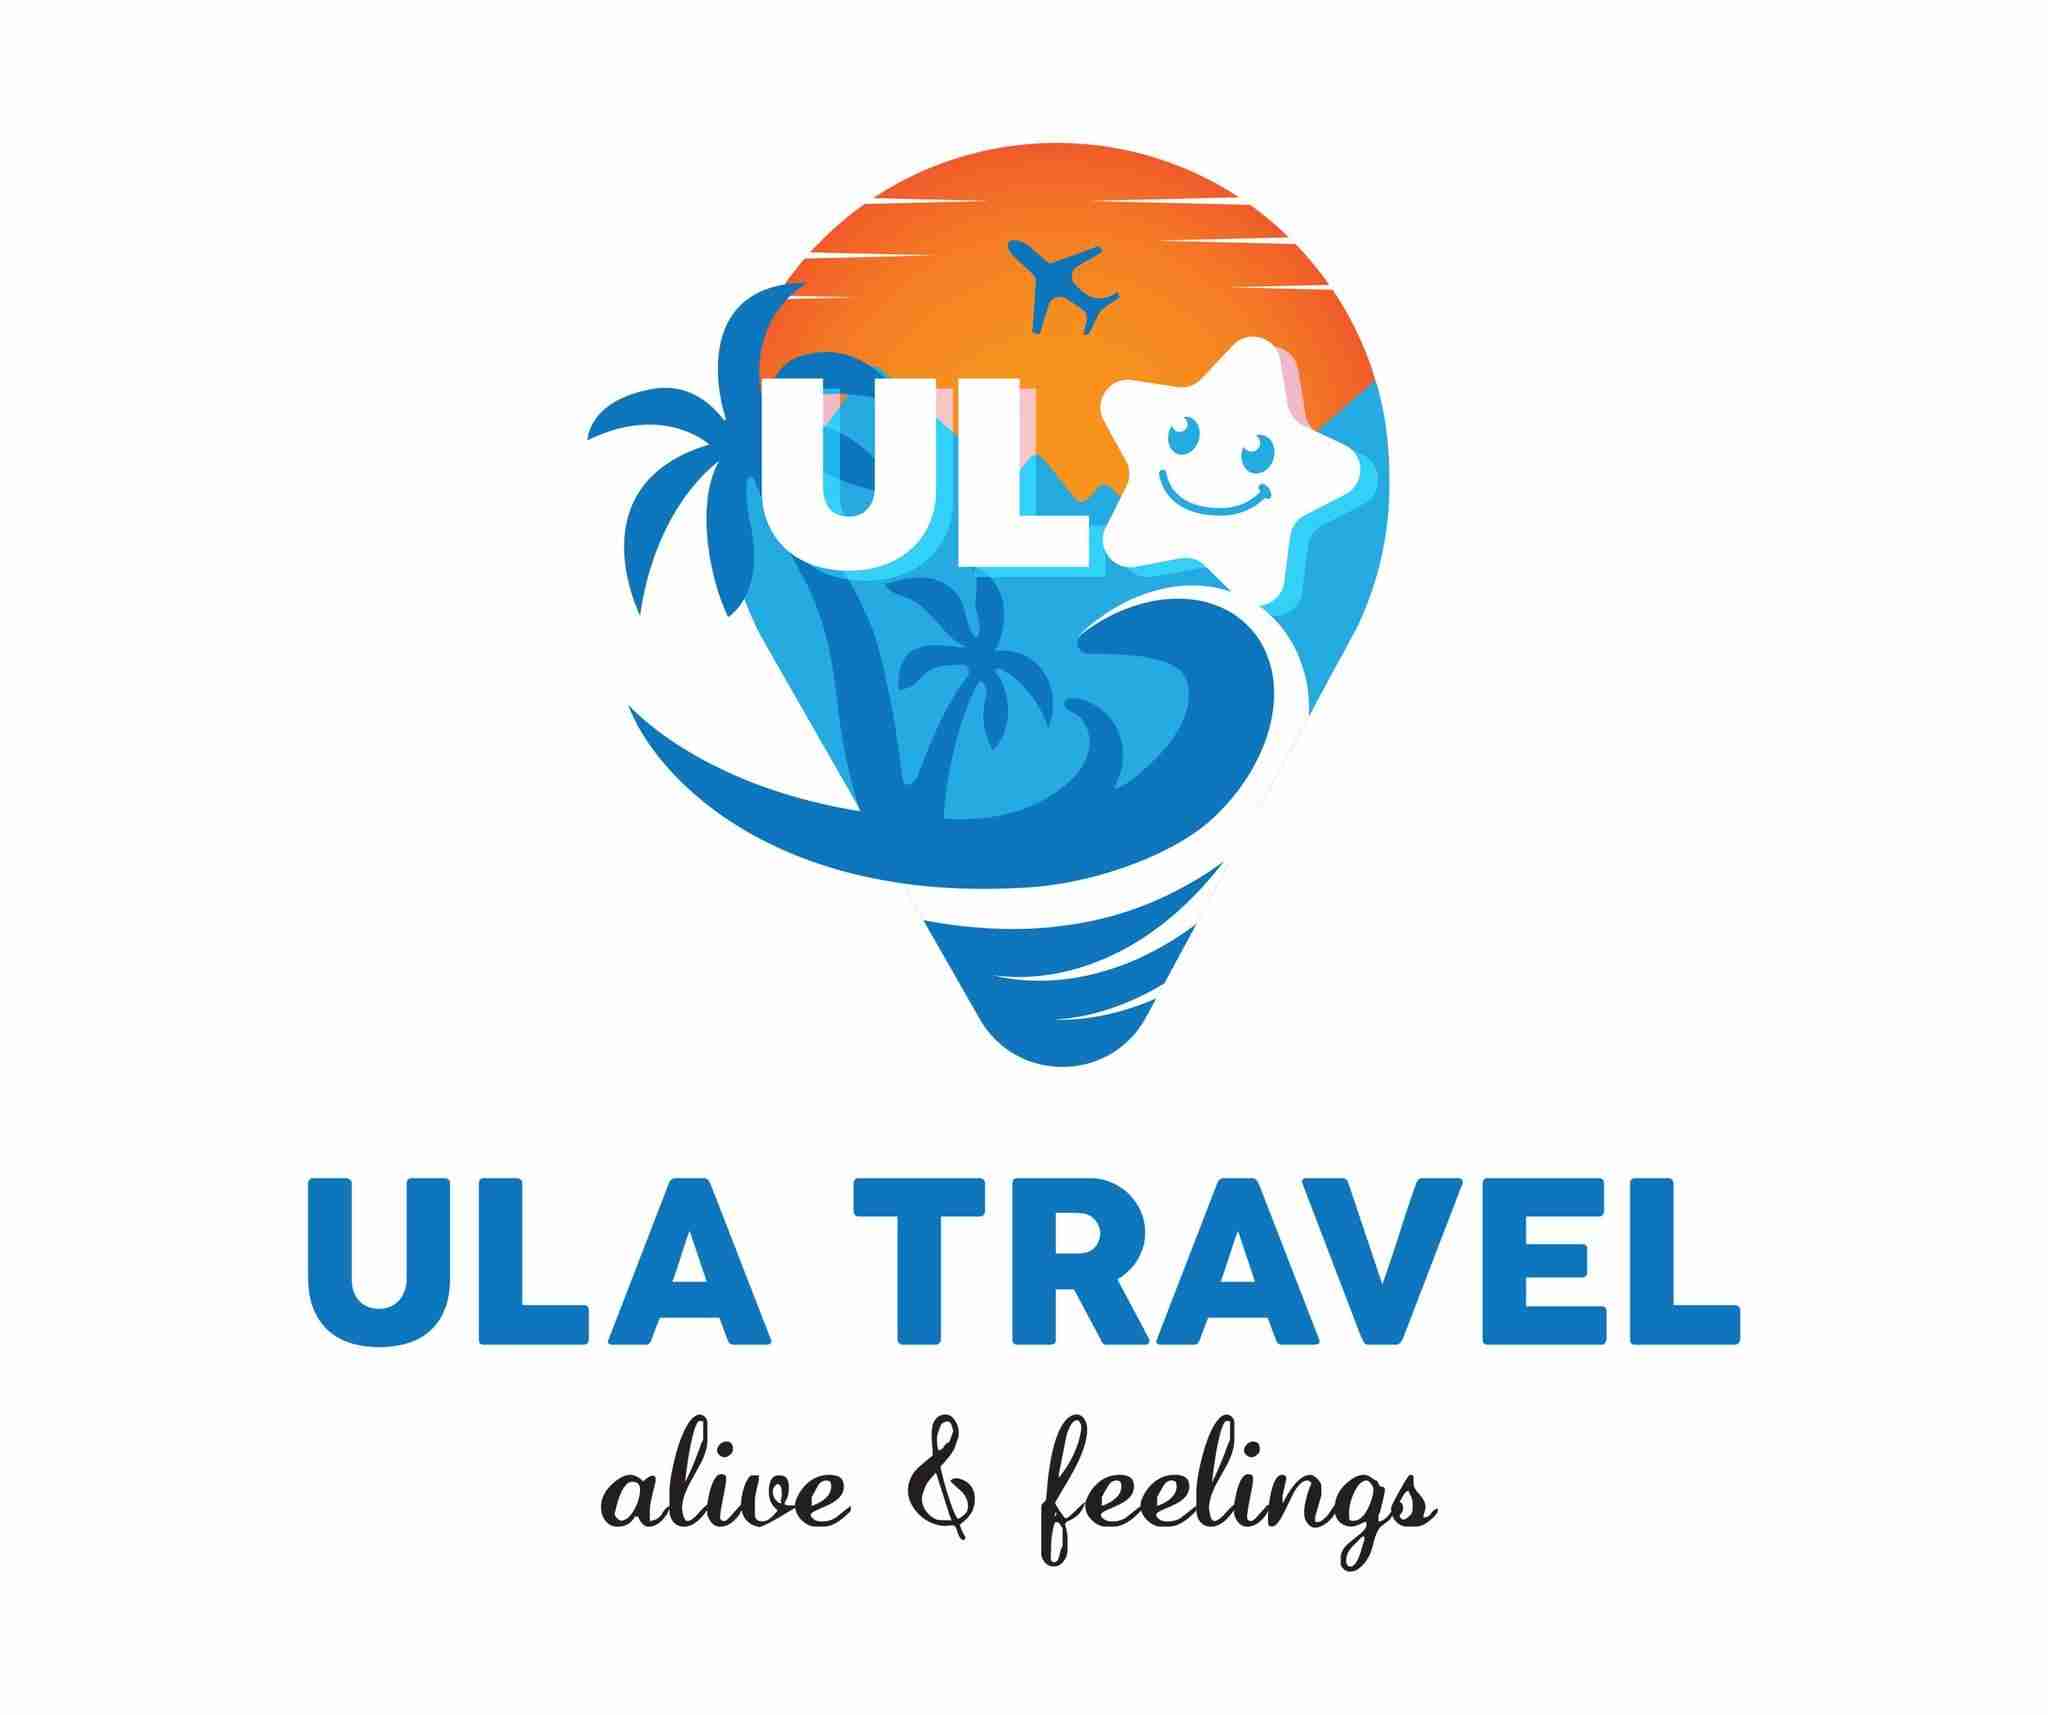 Ula Travel